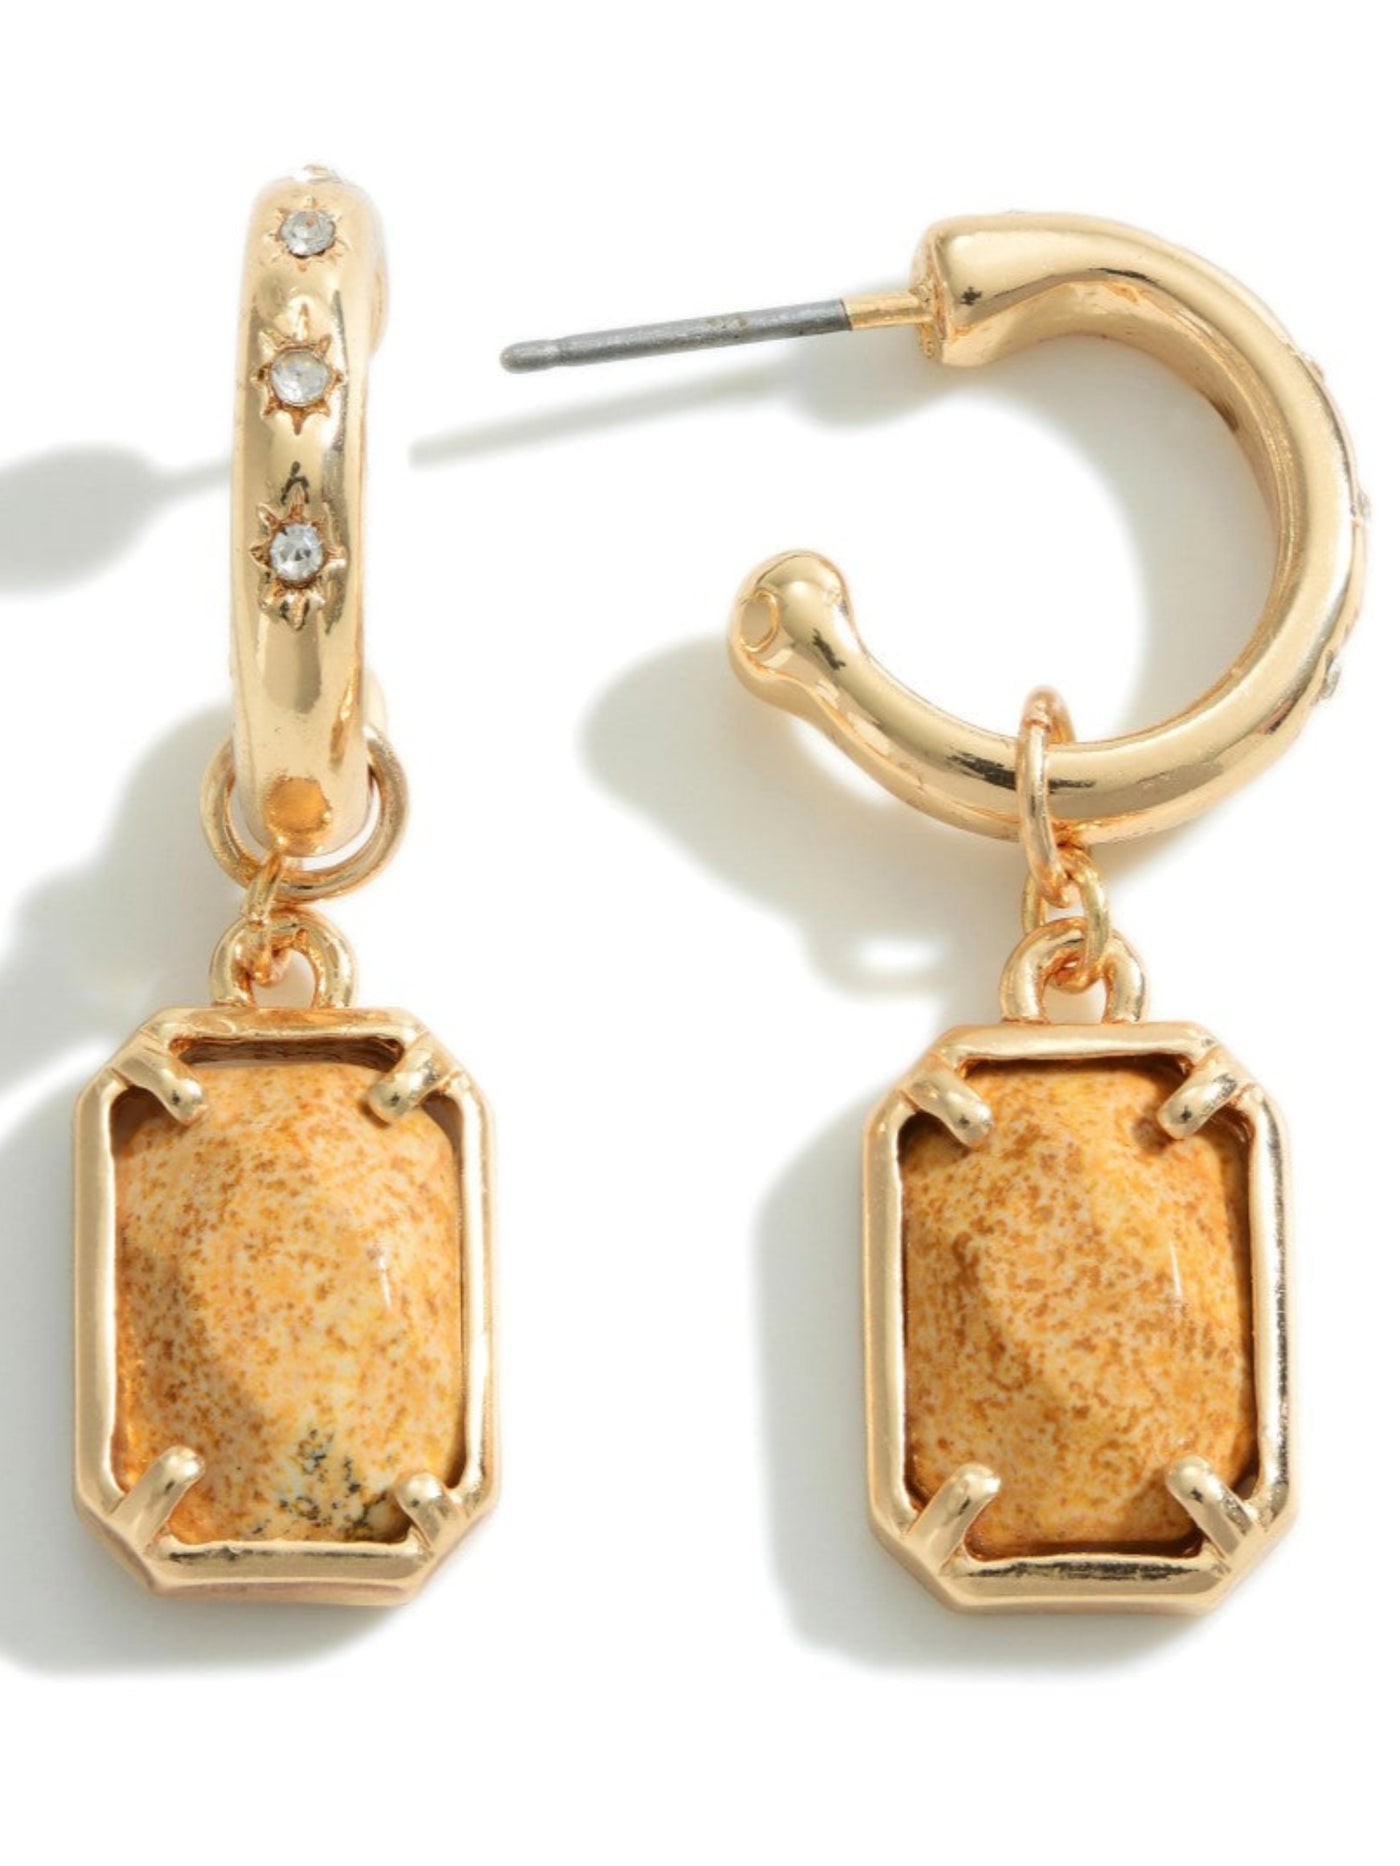 Gold Huggie Hoop Earring with Semi Precious Stone, Picture Jasper